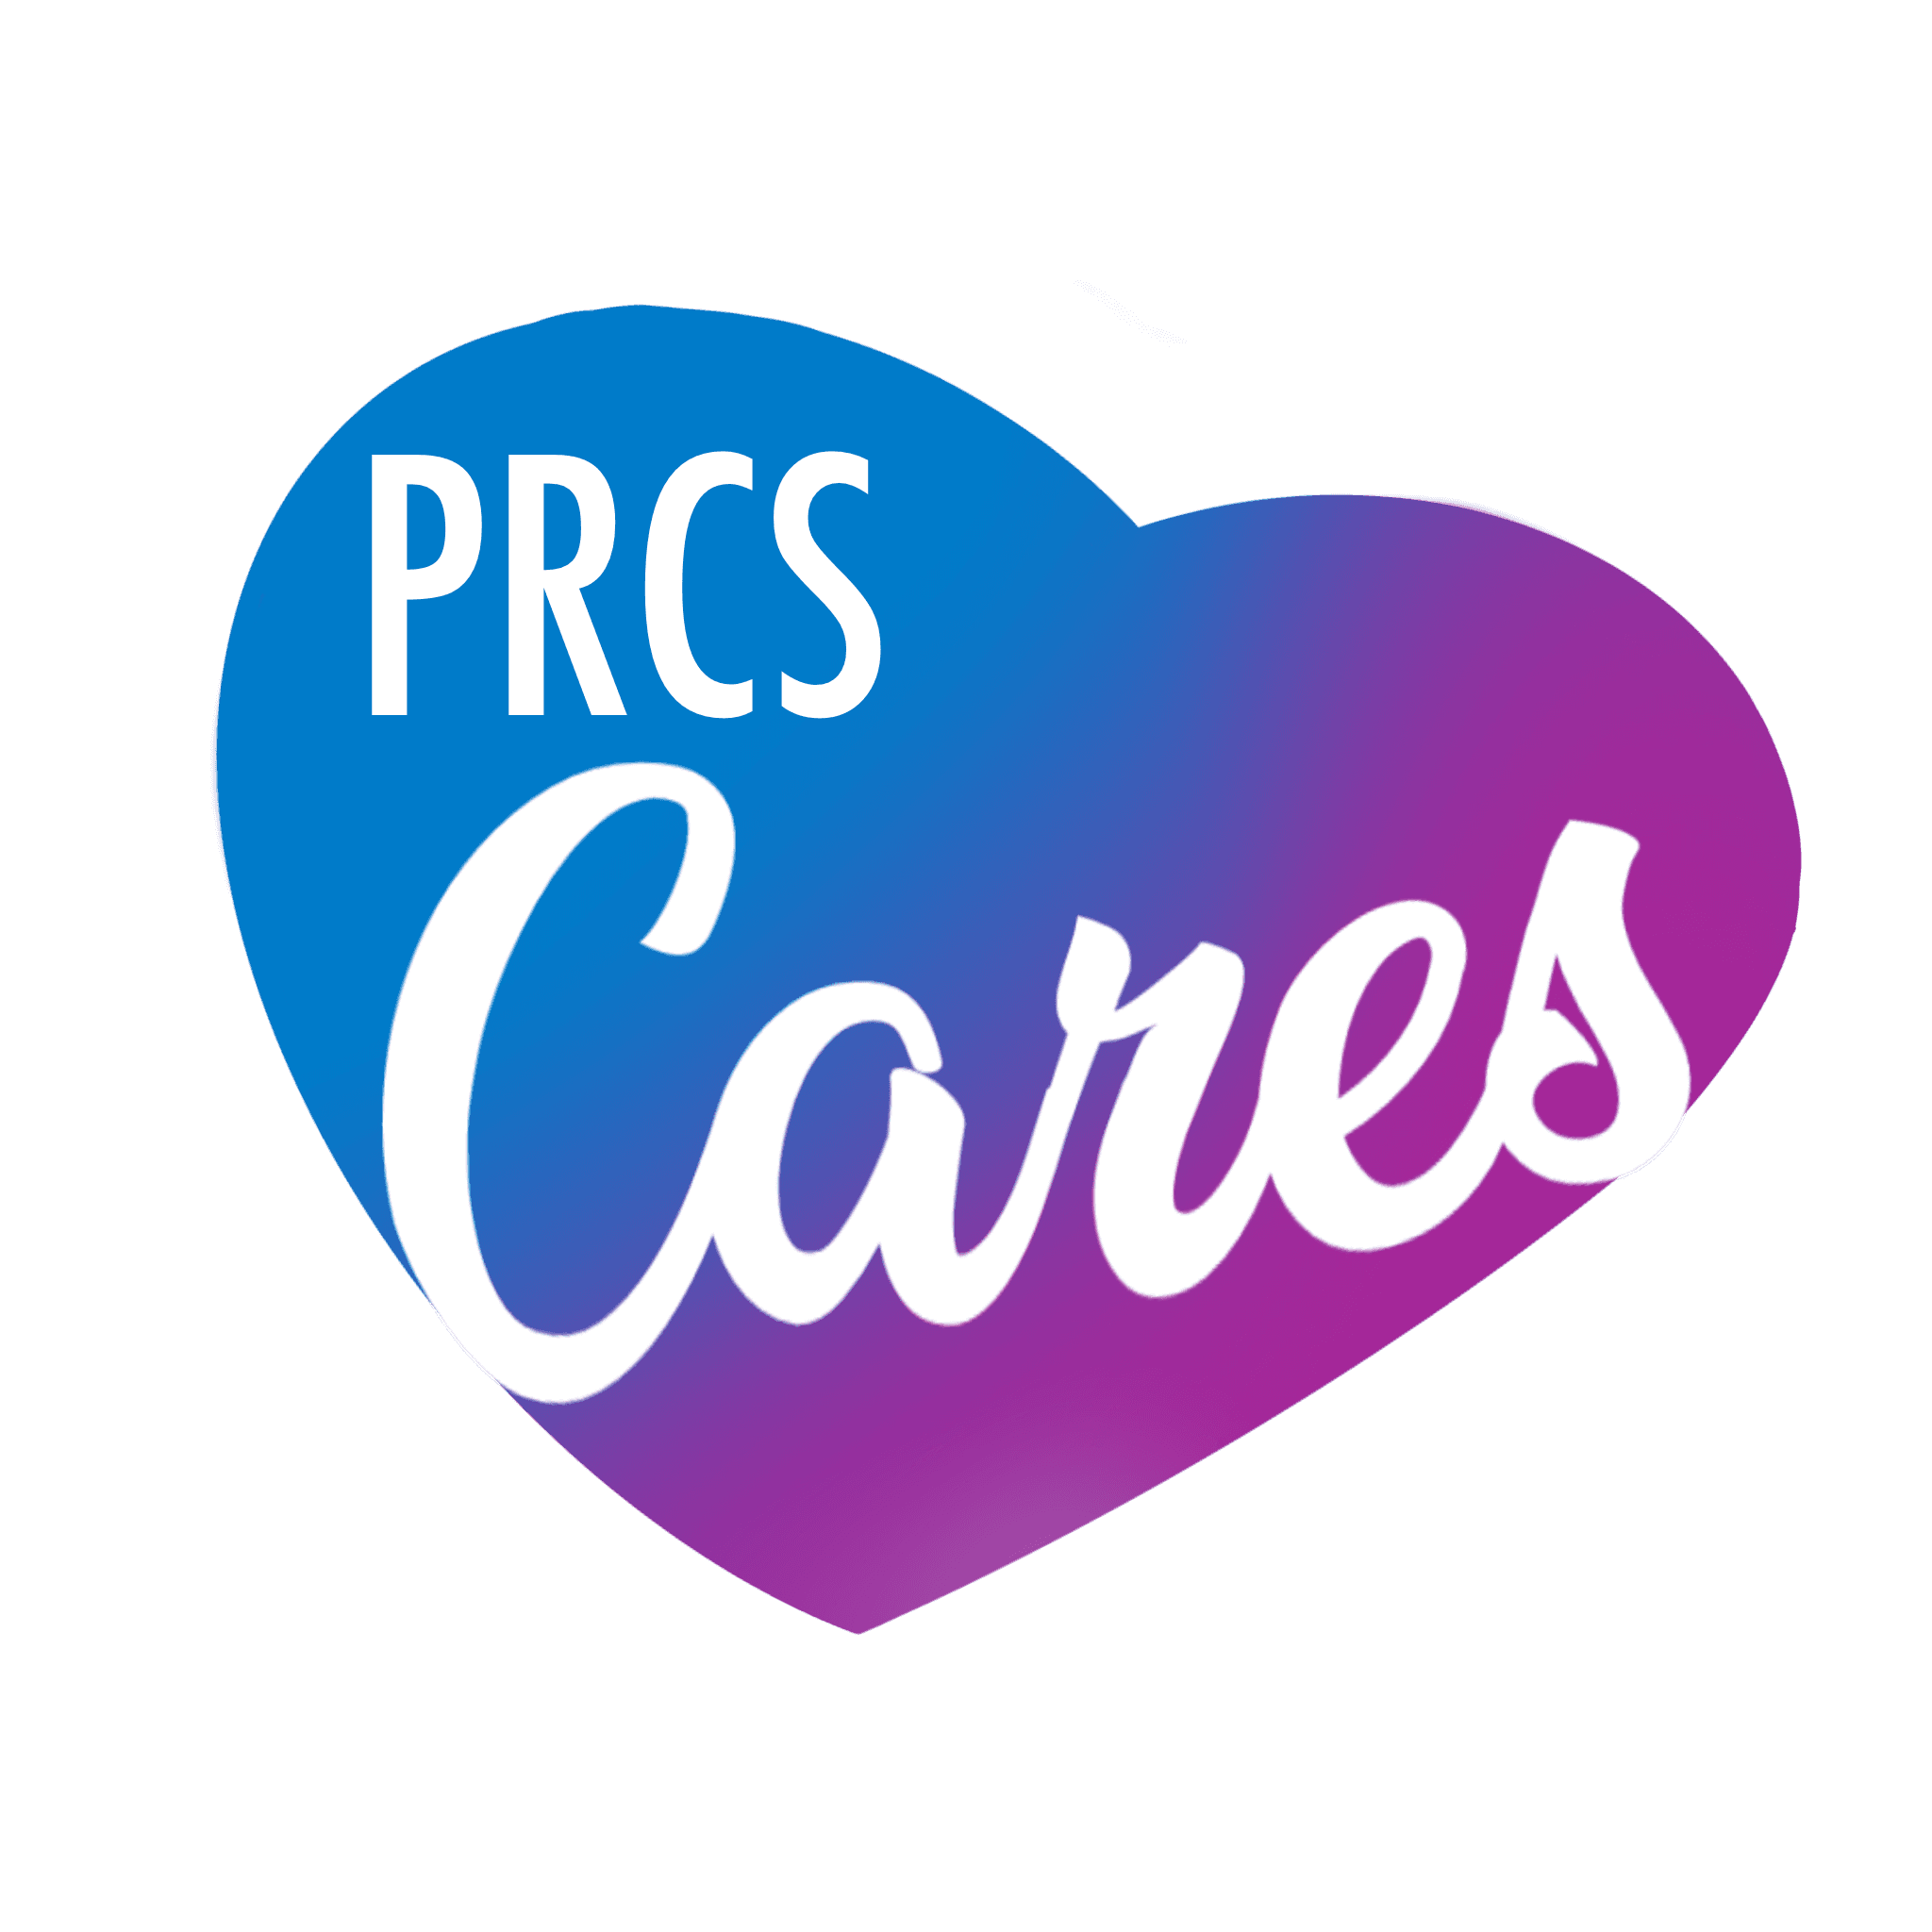 PRCS Cares